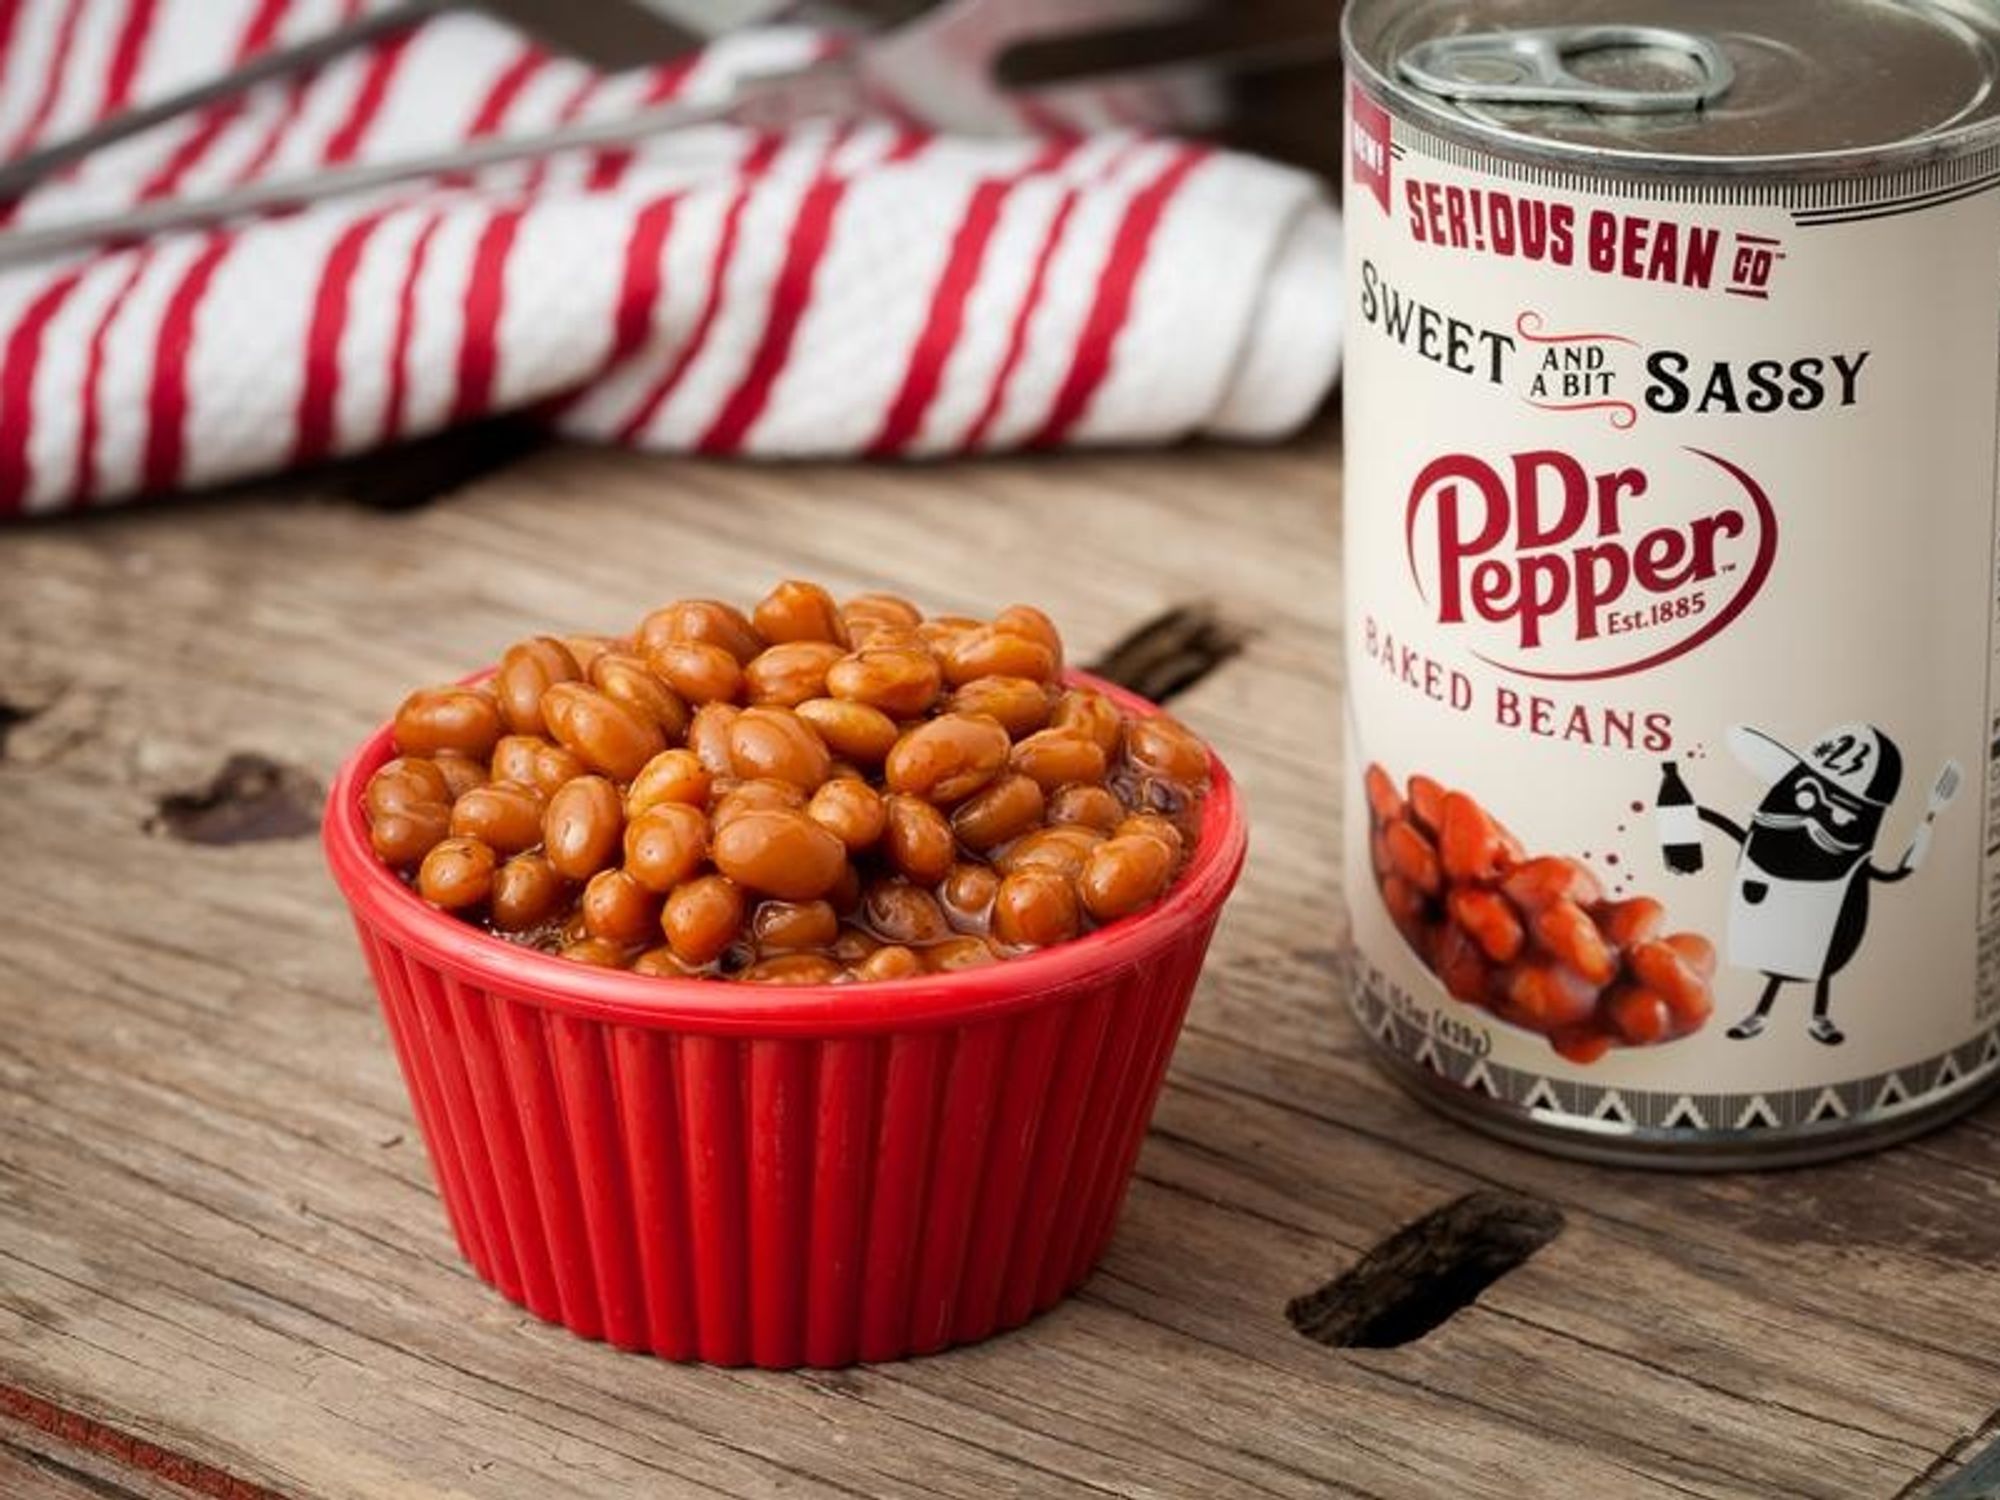 Dr Pepper Baked Beans 6 Pack – Serious Bean Co.